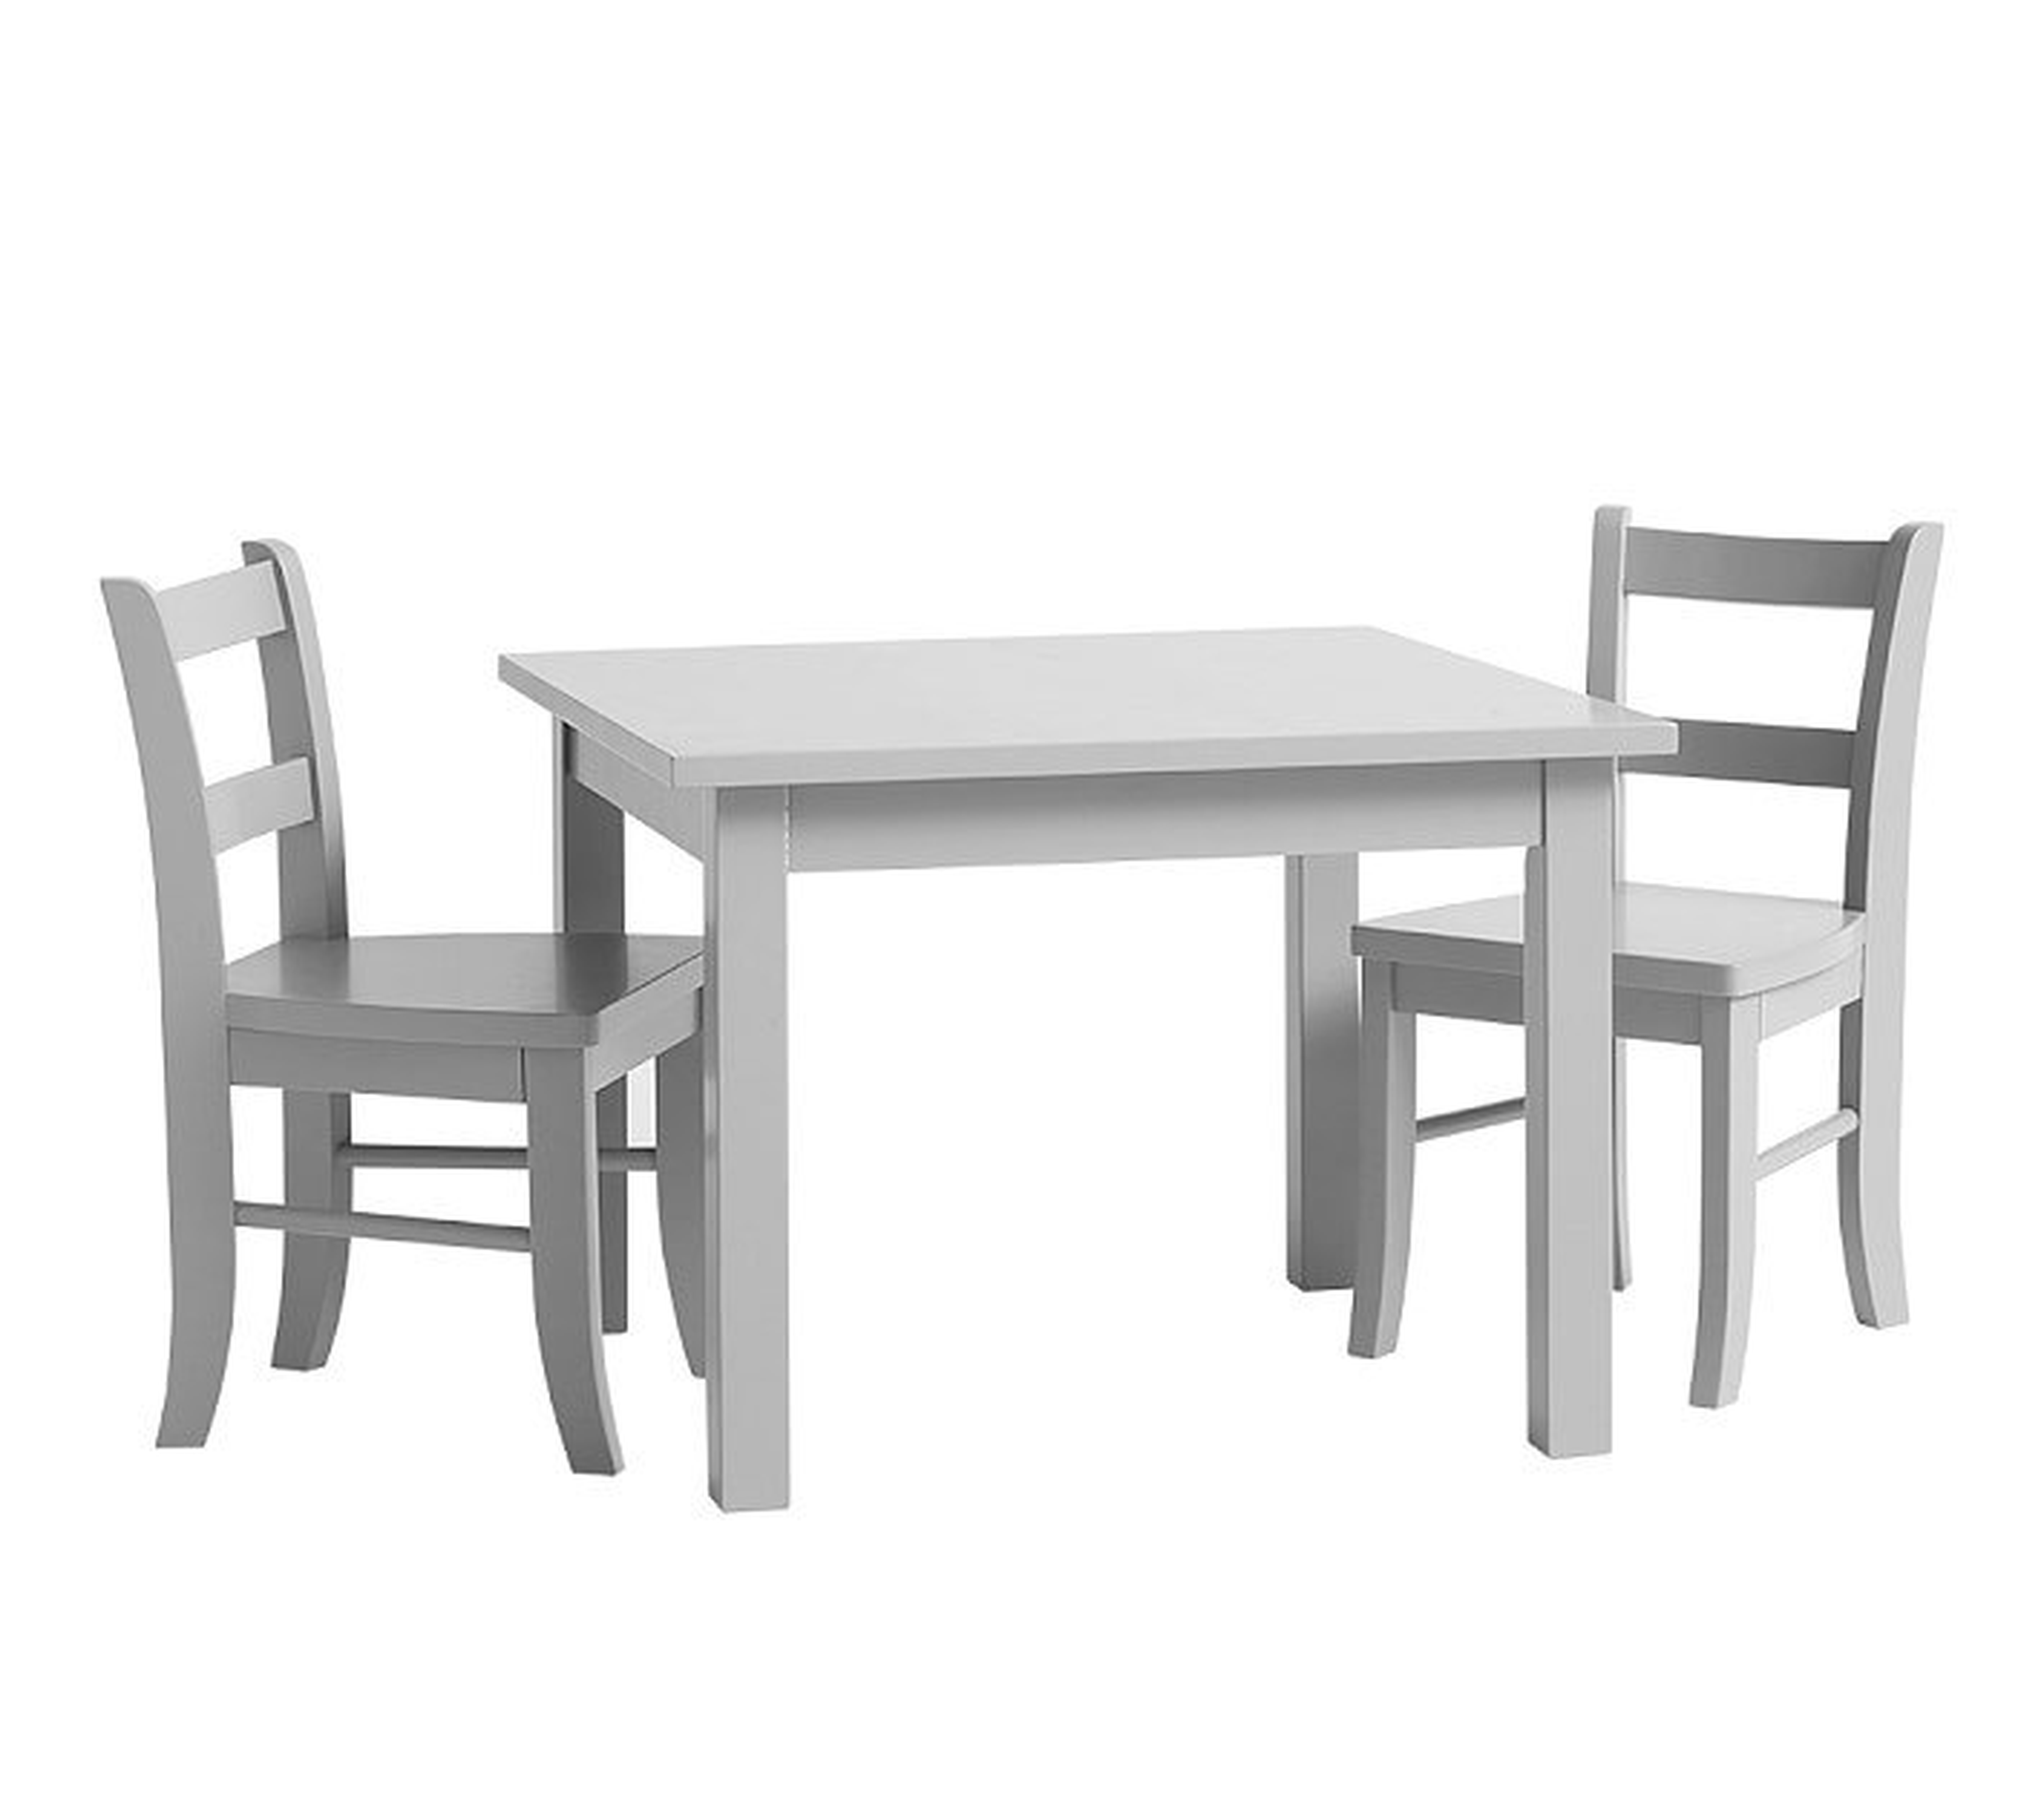 Table & Set of 2 Chairs, Smoked Charcoal - Pottery Barn Kids